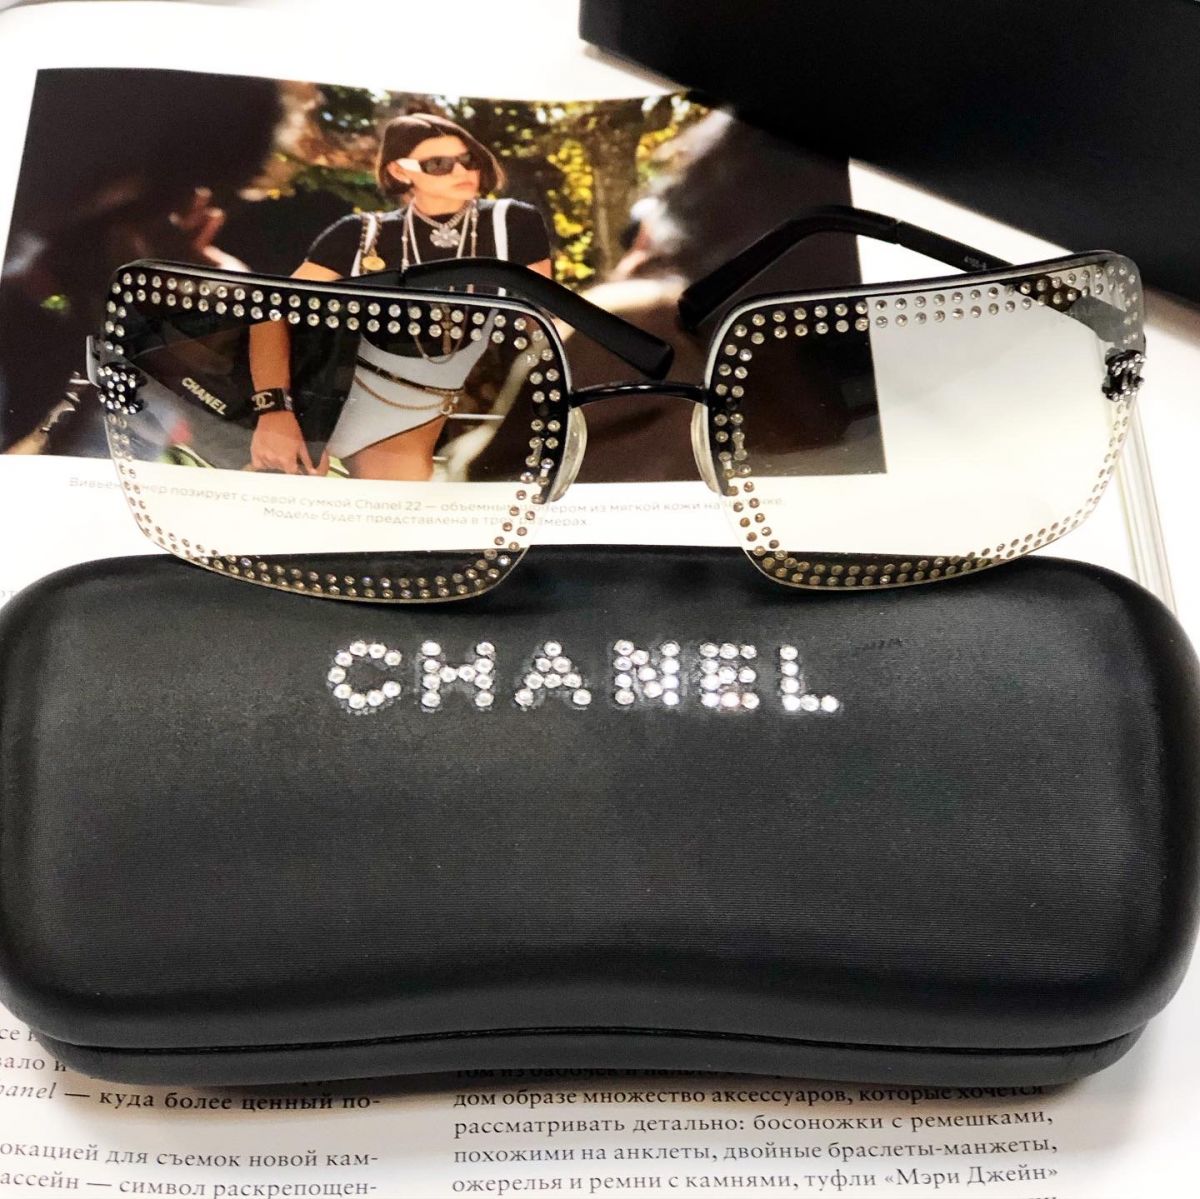 Очки Chanel цена 10 770 руб